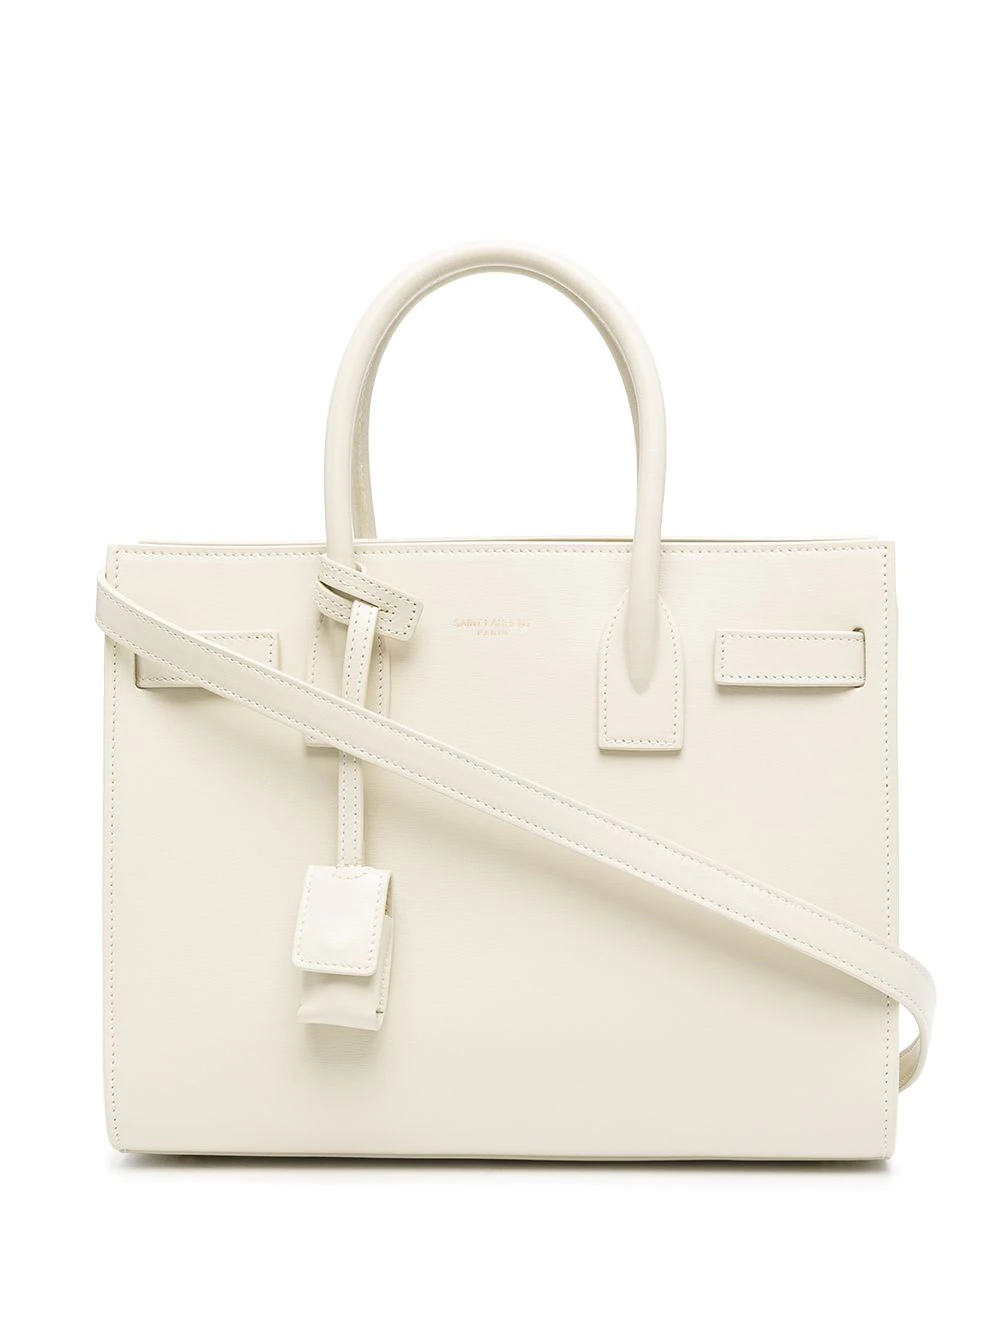 New Designer Handbag Unboxing - Saint Laurent Sac De Jour Croc Effect